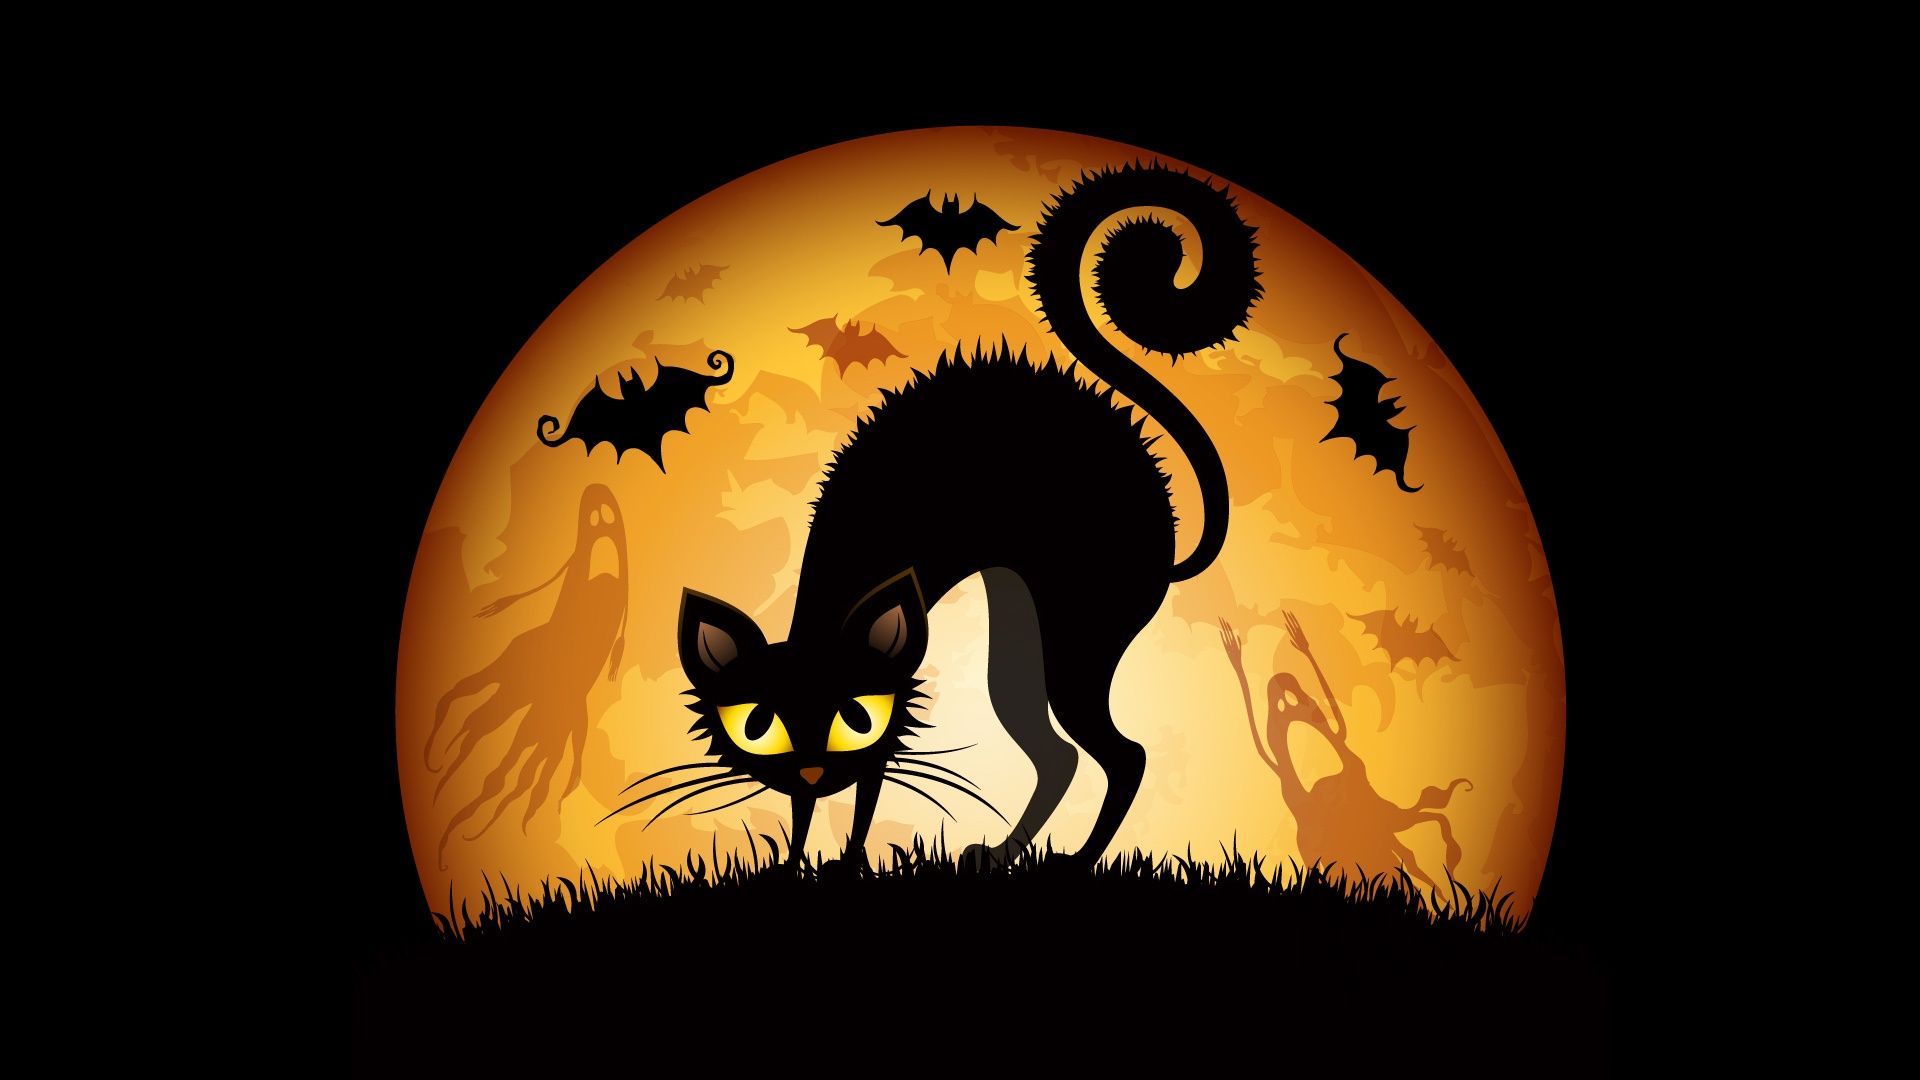 Halloween Cats Bats Wallpaper in jpg format for free download